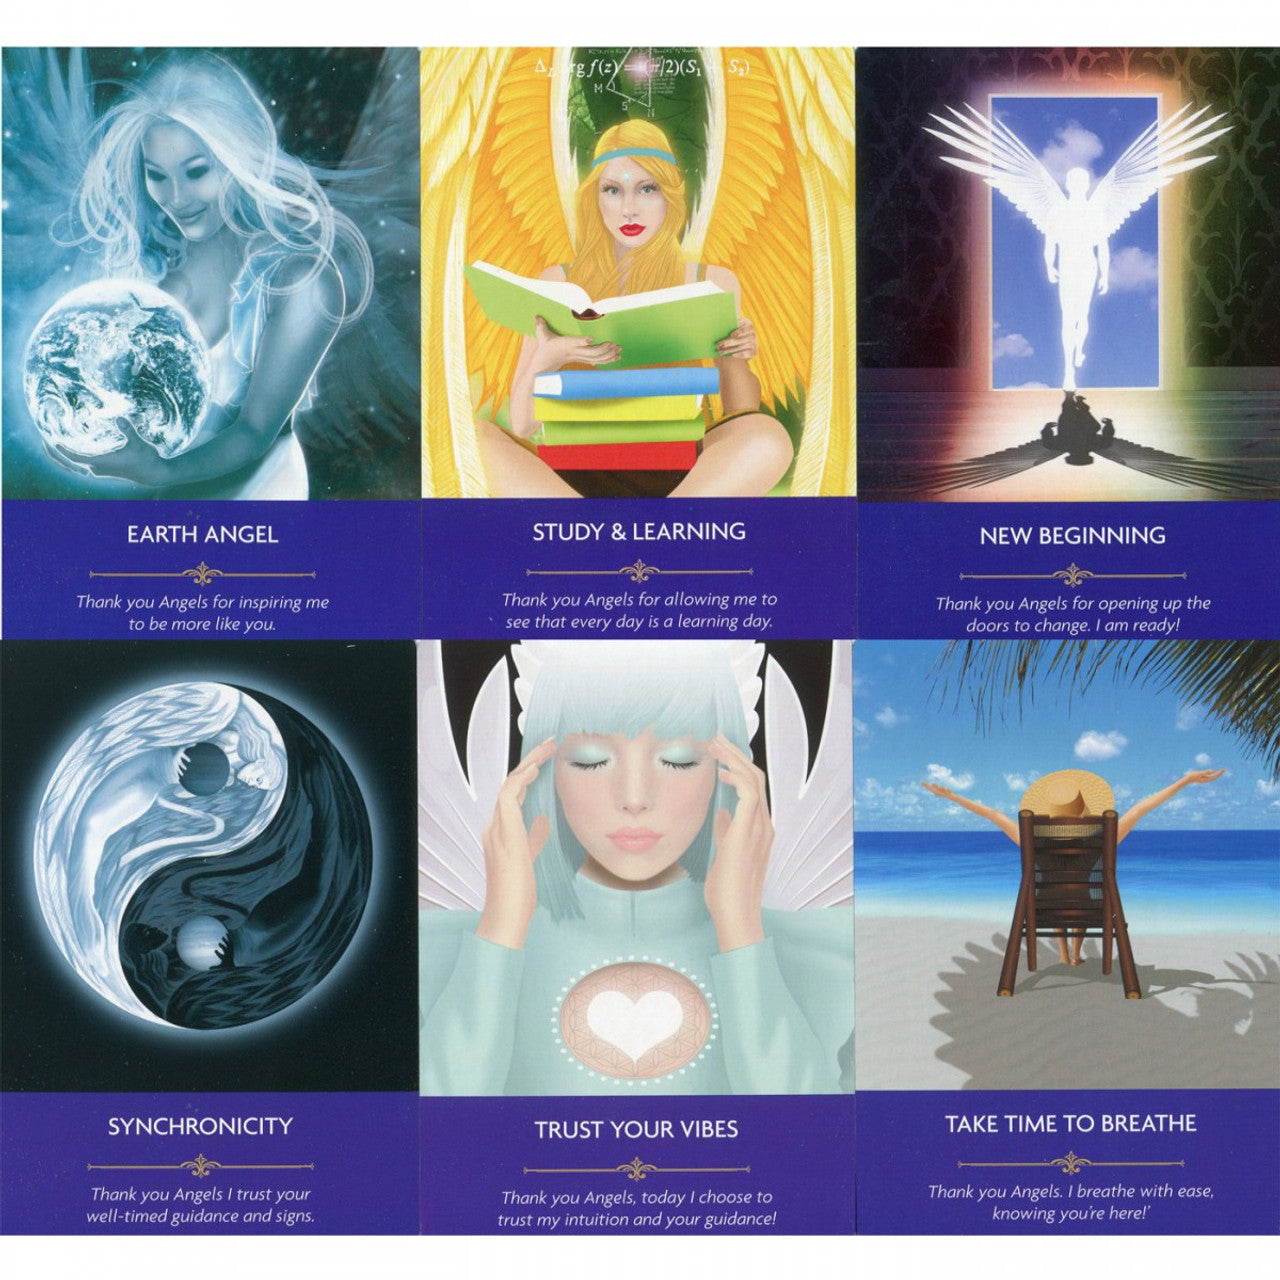 Angel prayer oracle cards